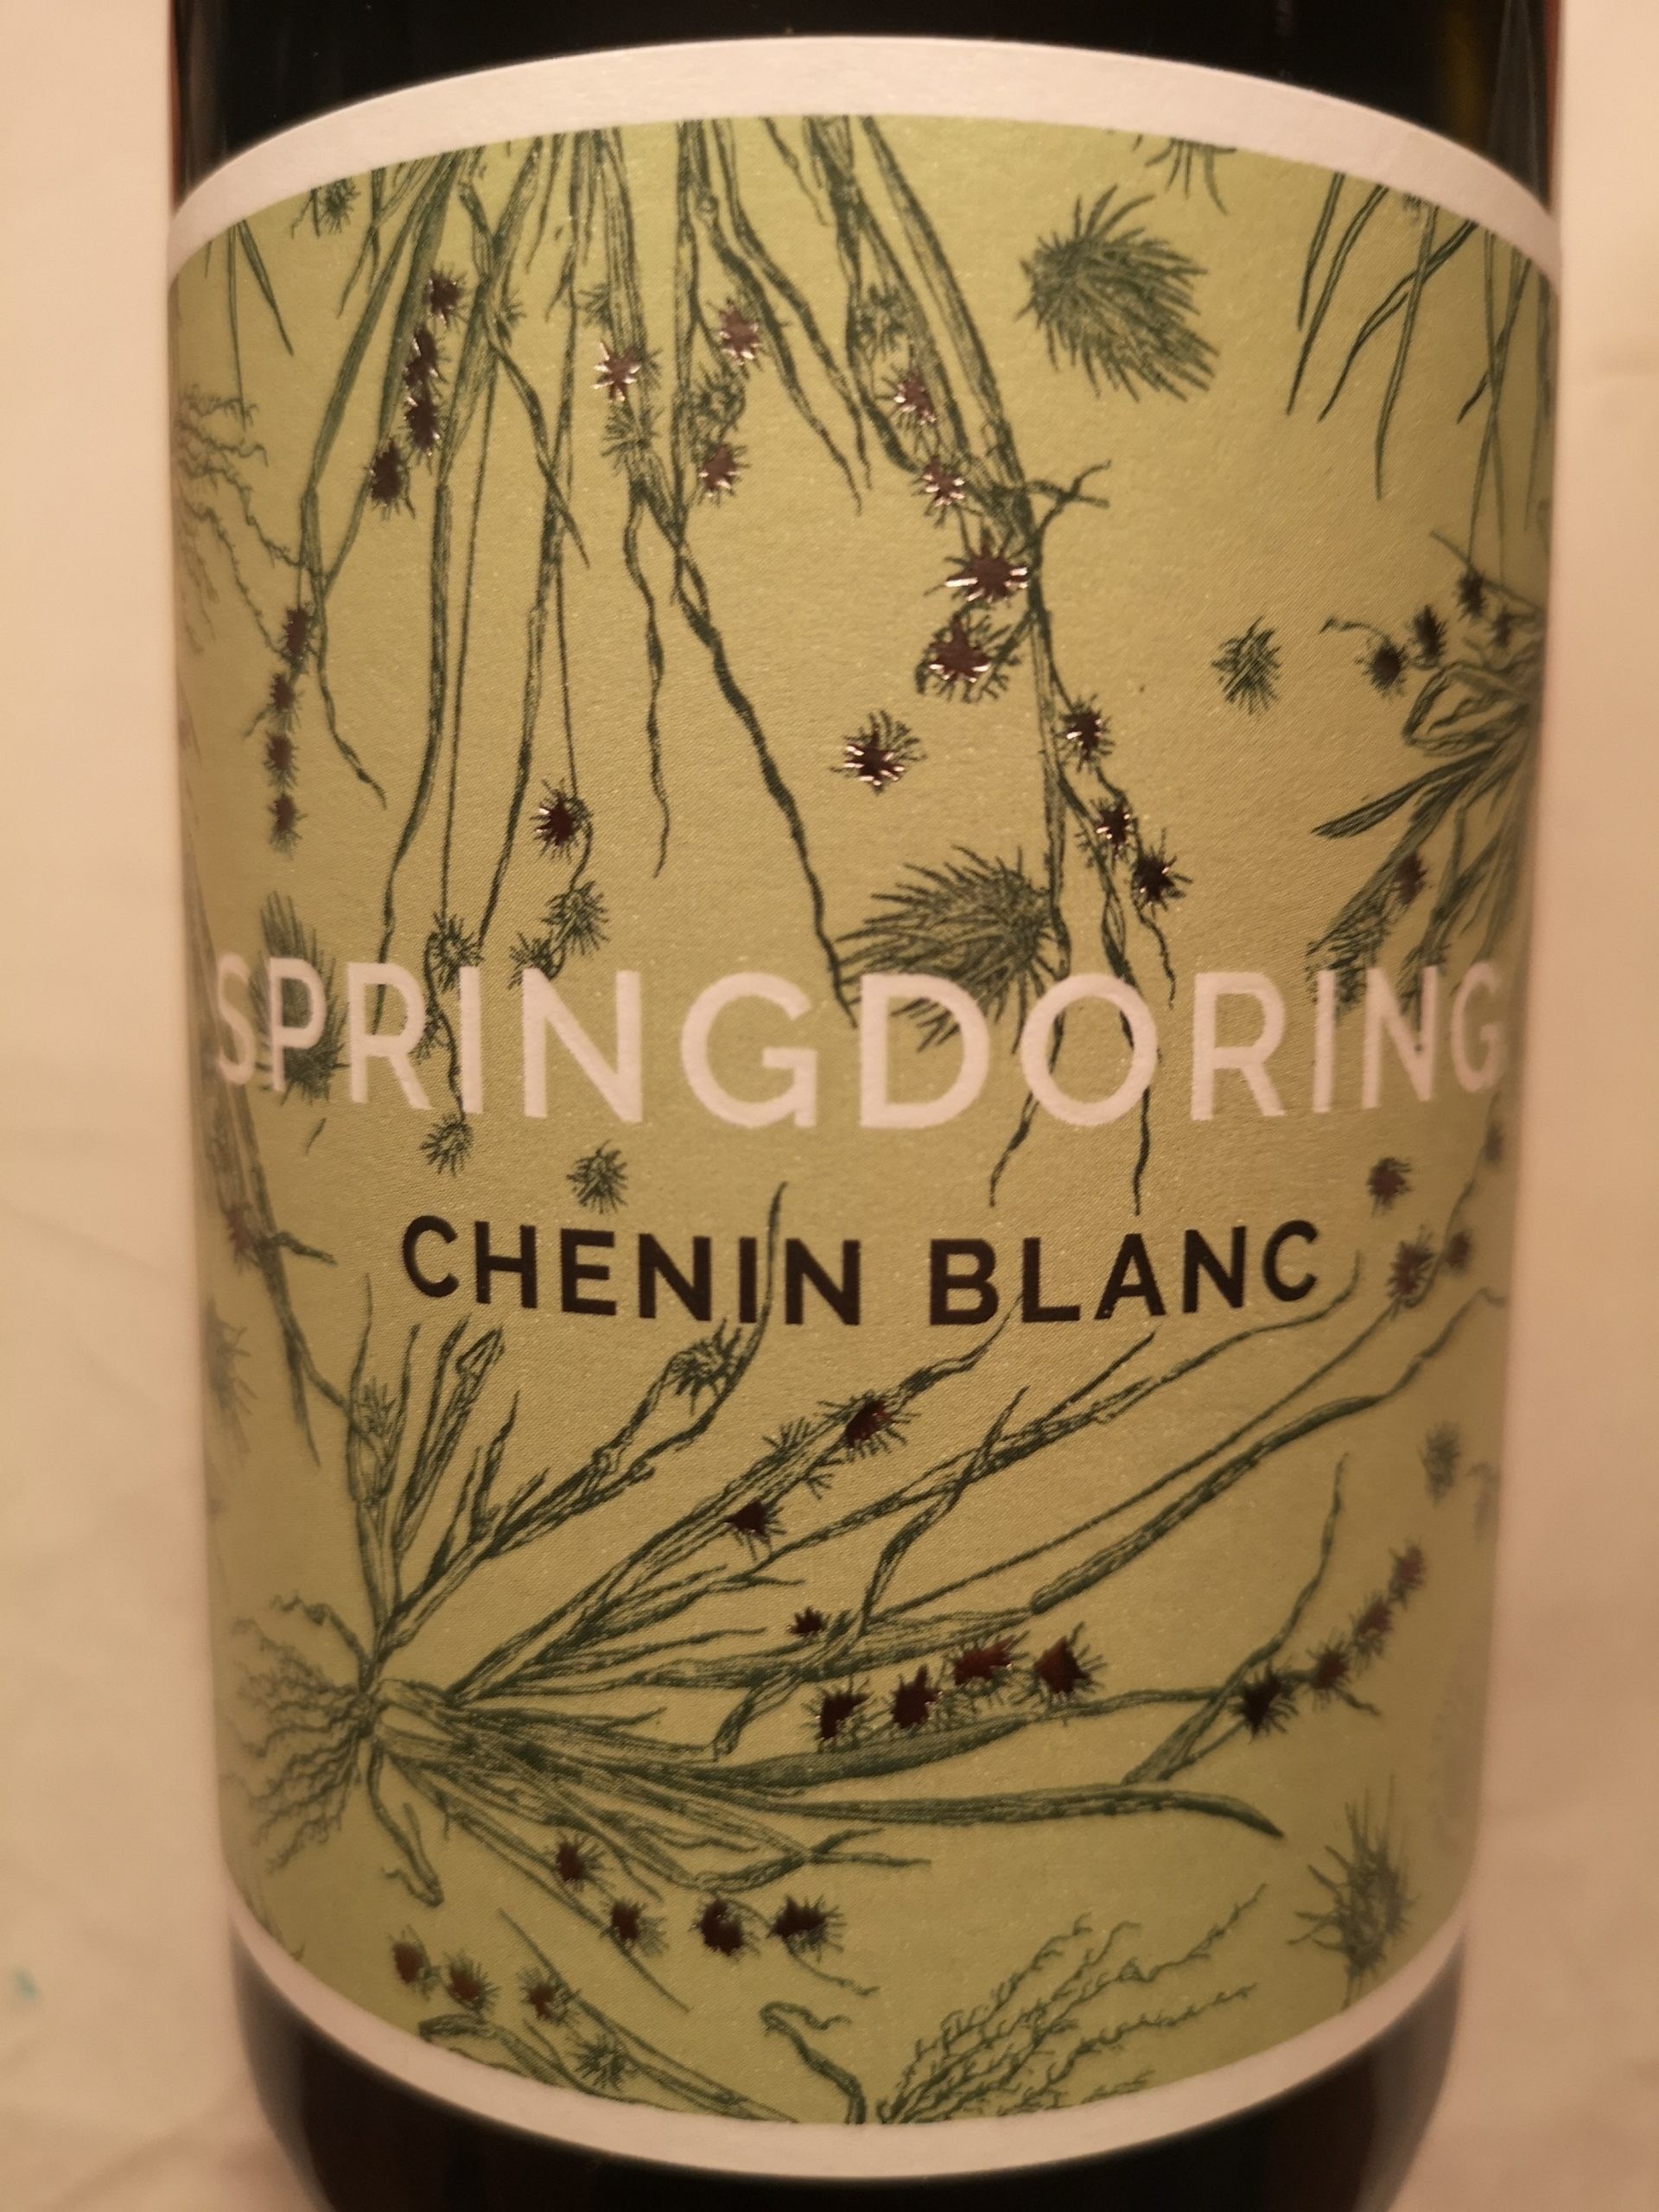 2020 Chenin Blanc Springdoring | Thistle & Weed Wines